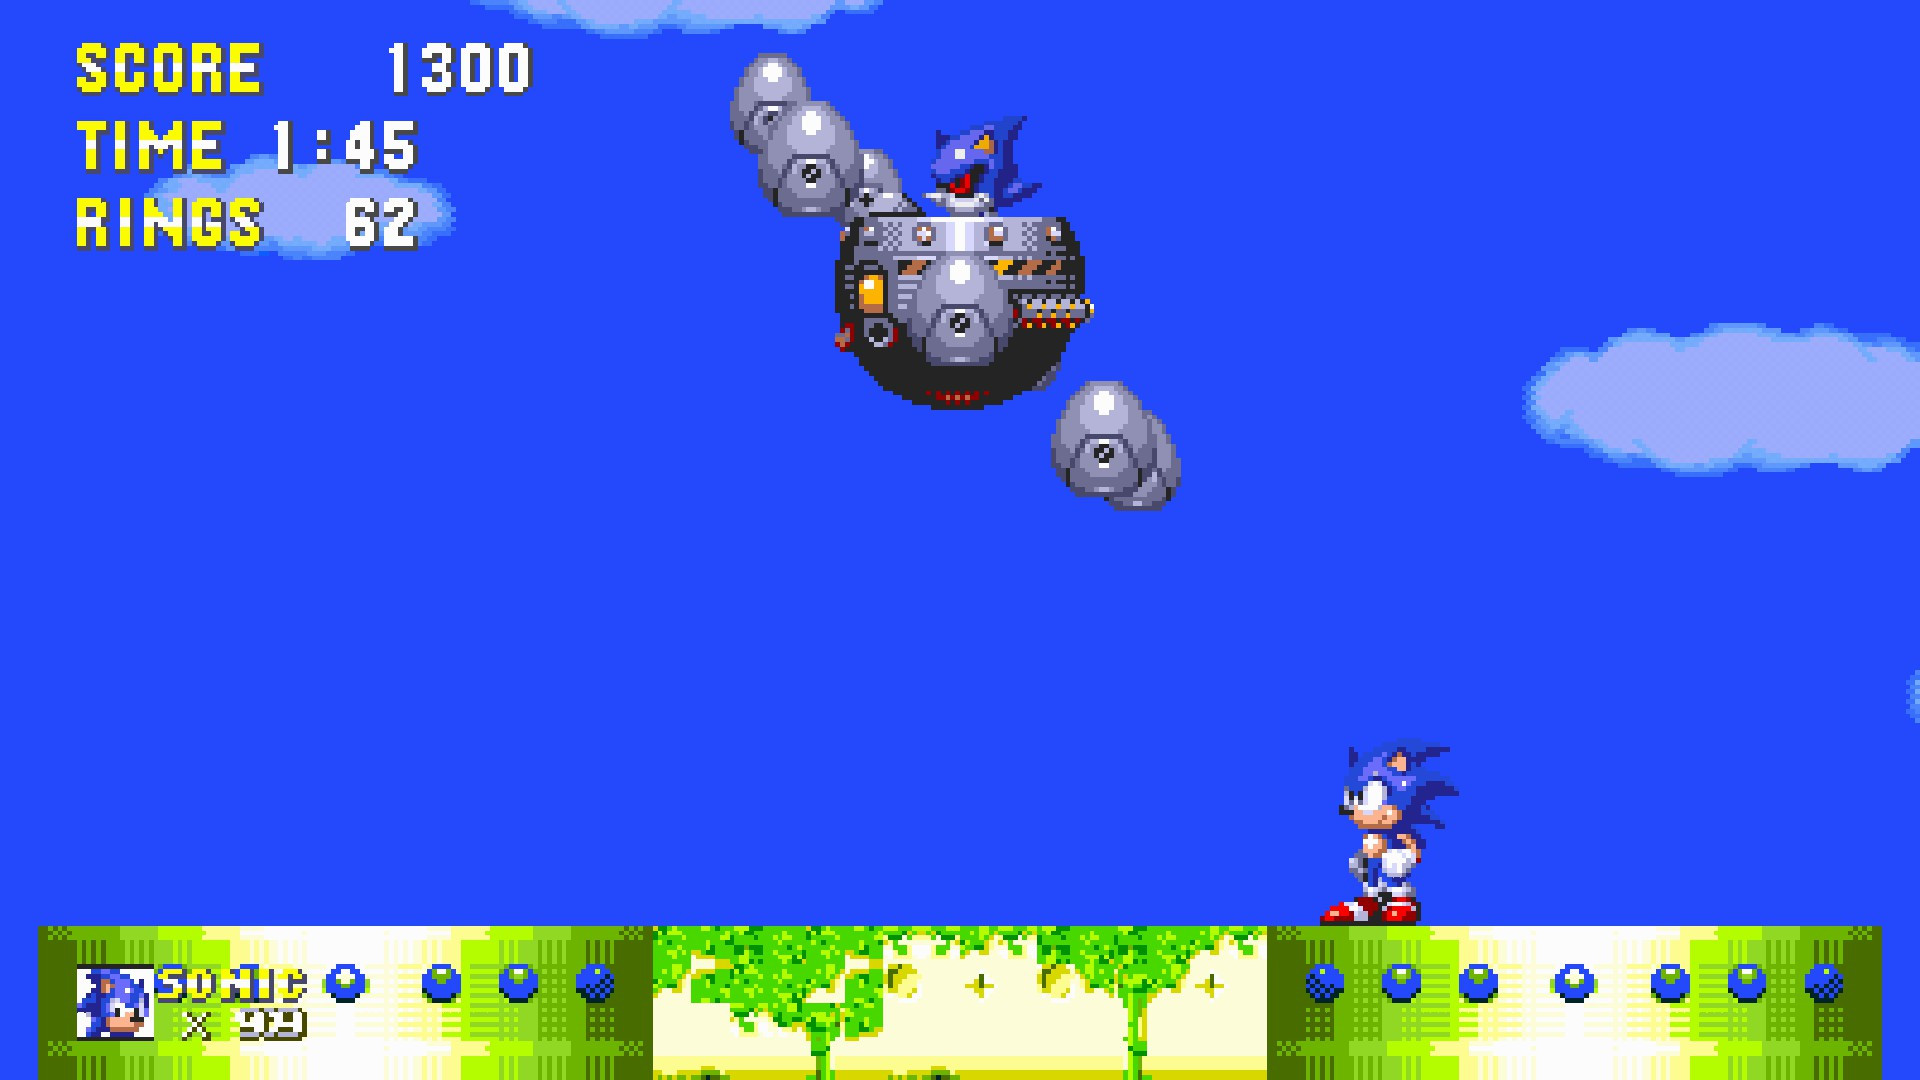 Metal Sonic Over Mecha Sonic [Sonic 3 A.I.R.] [Mods]